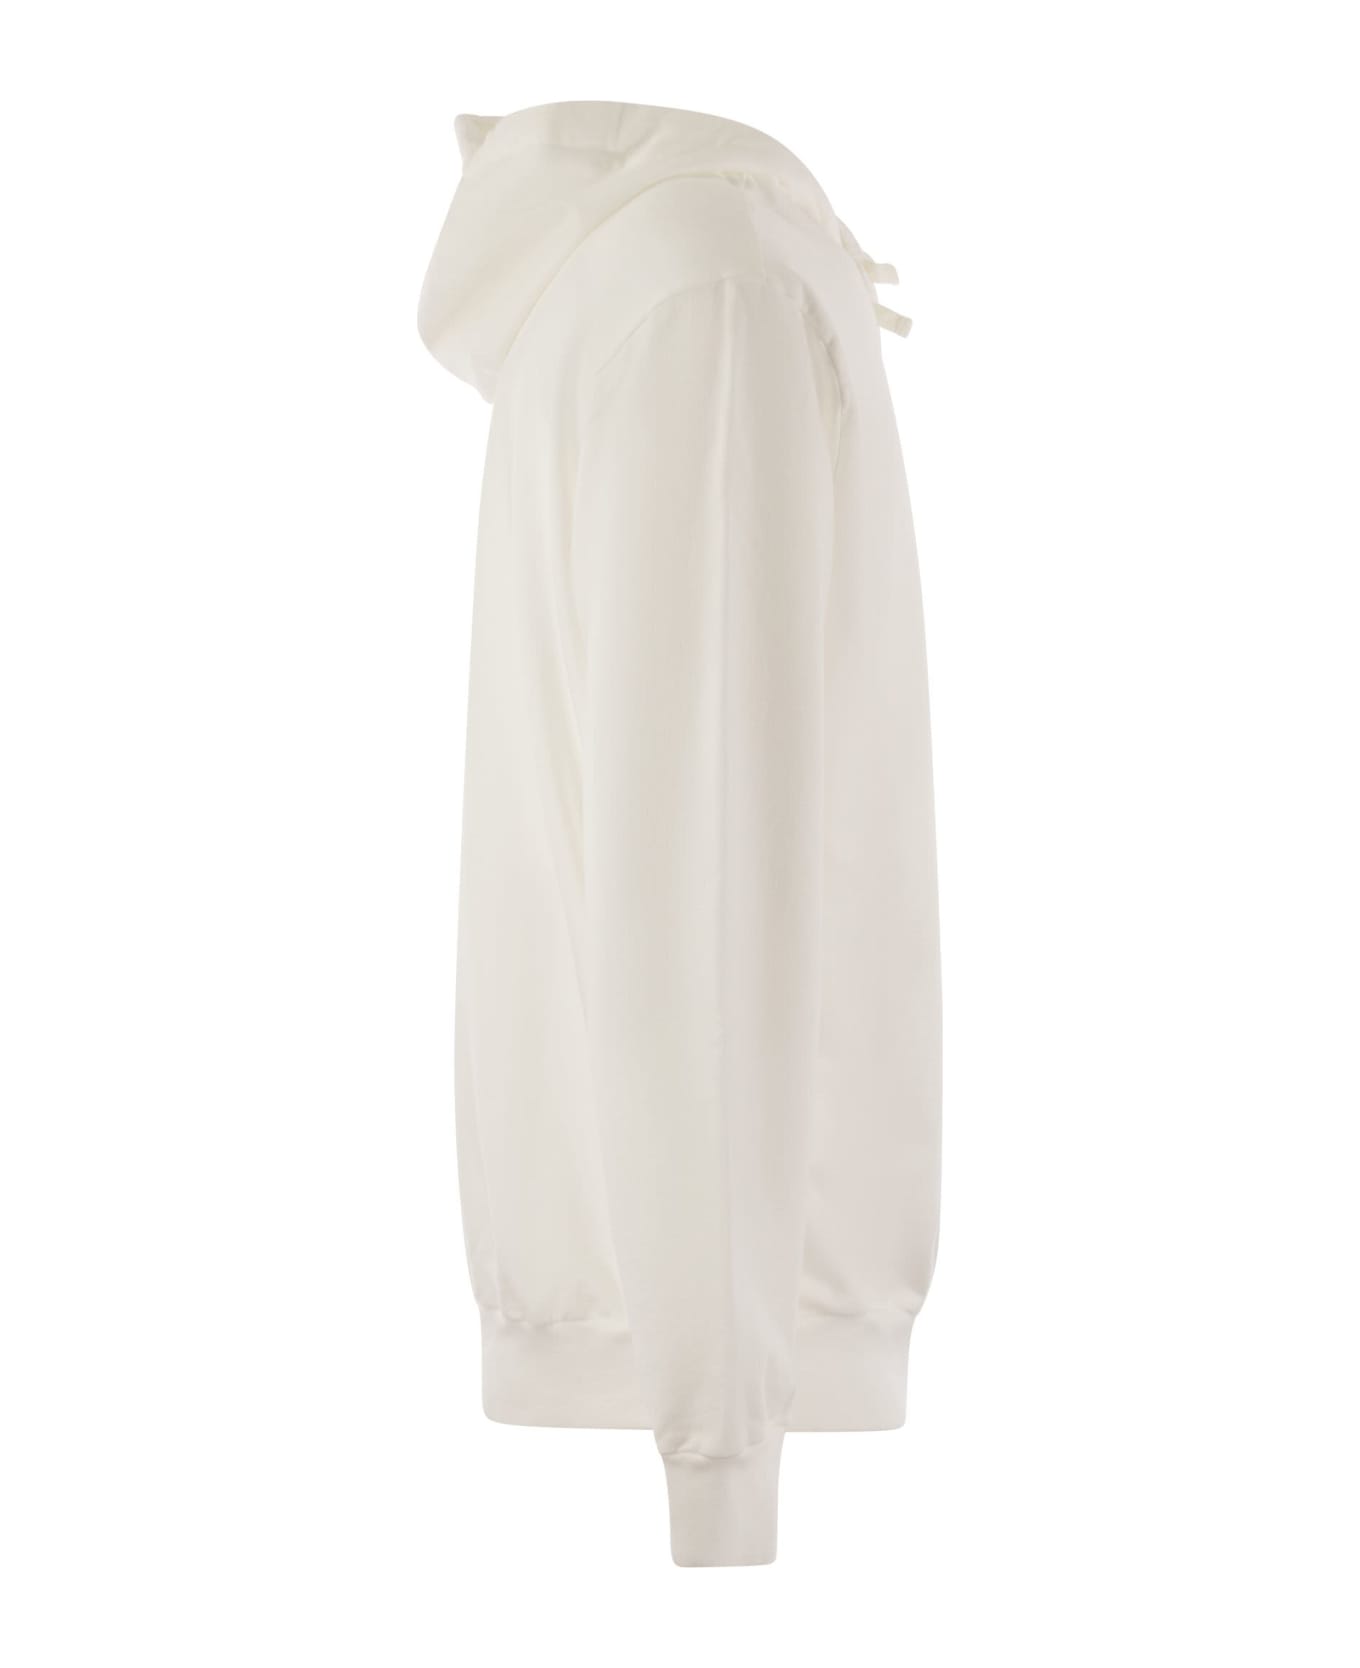 Premiata Sweatshirt Pr352230 With Hood - White